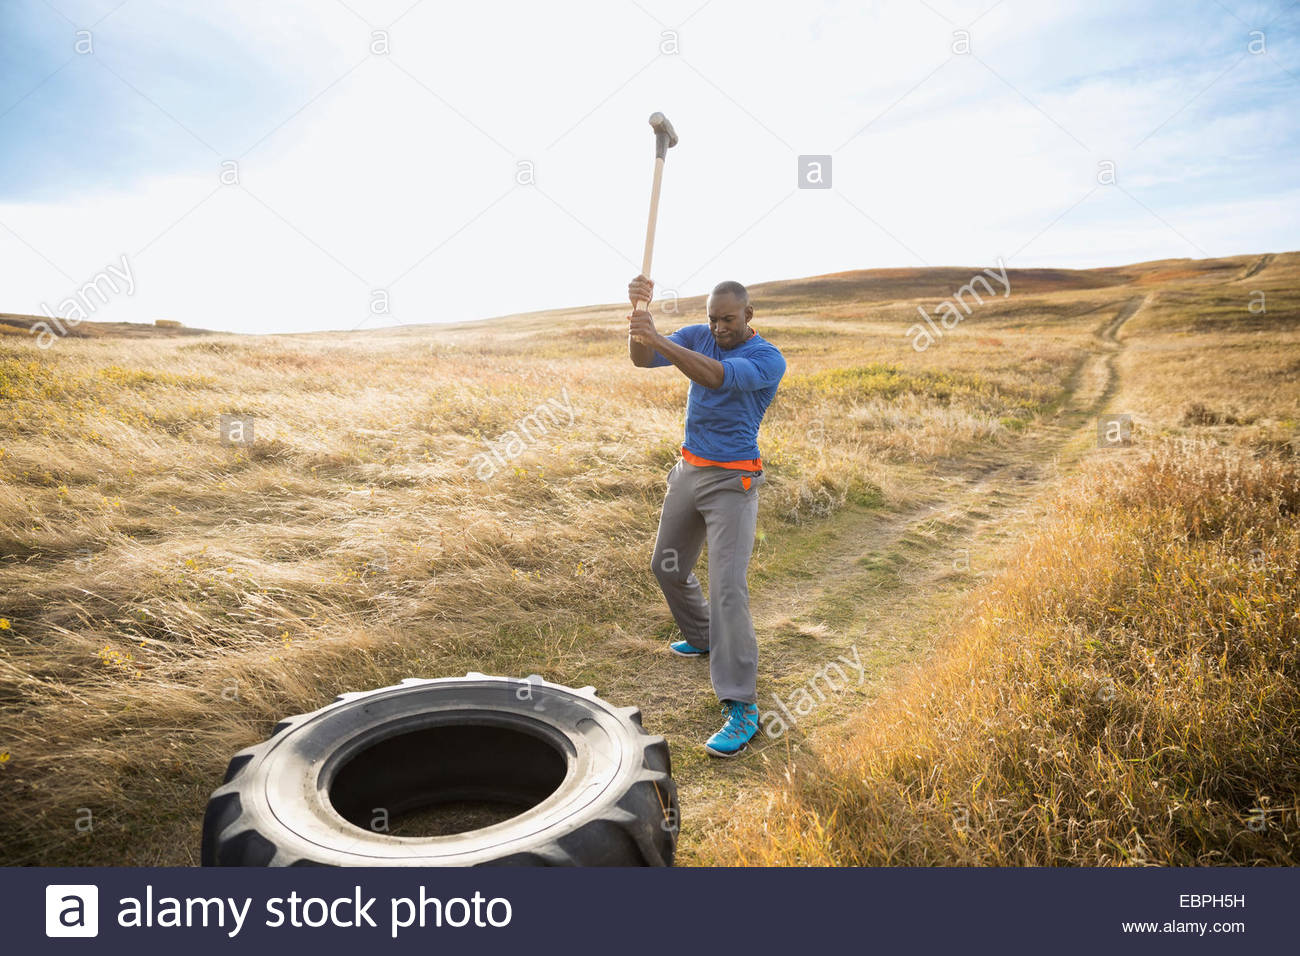 Man hammering crossfit tire in sunny rural field Stock Photo